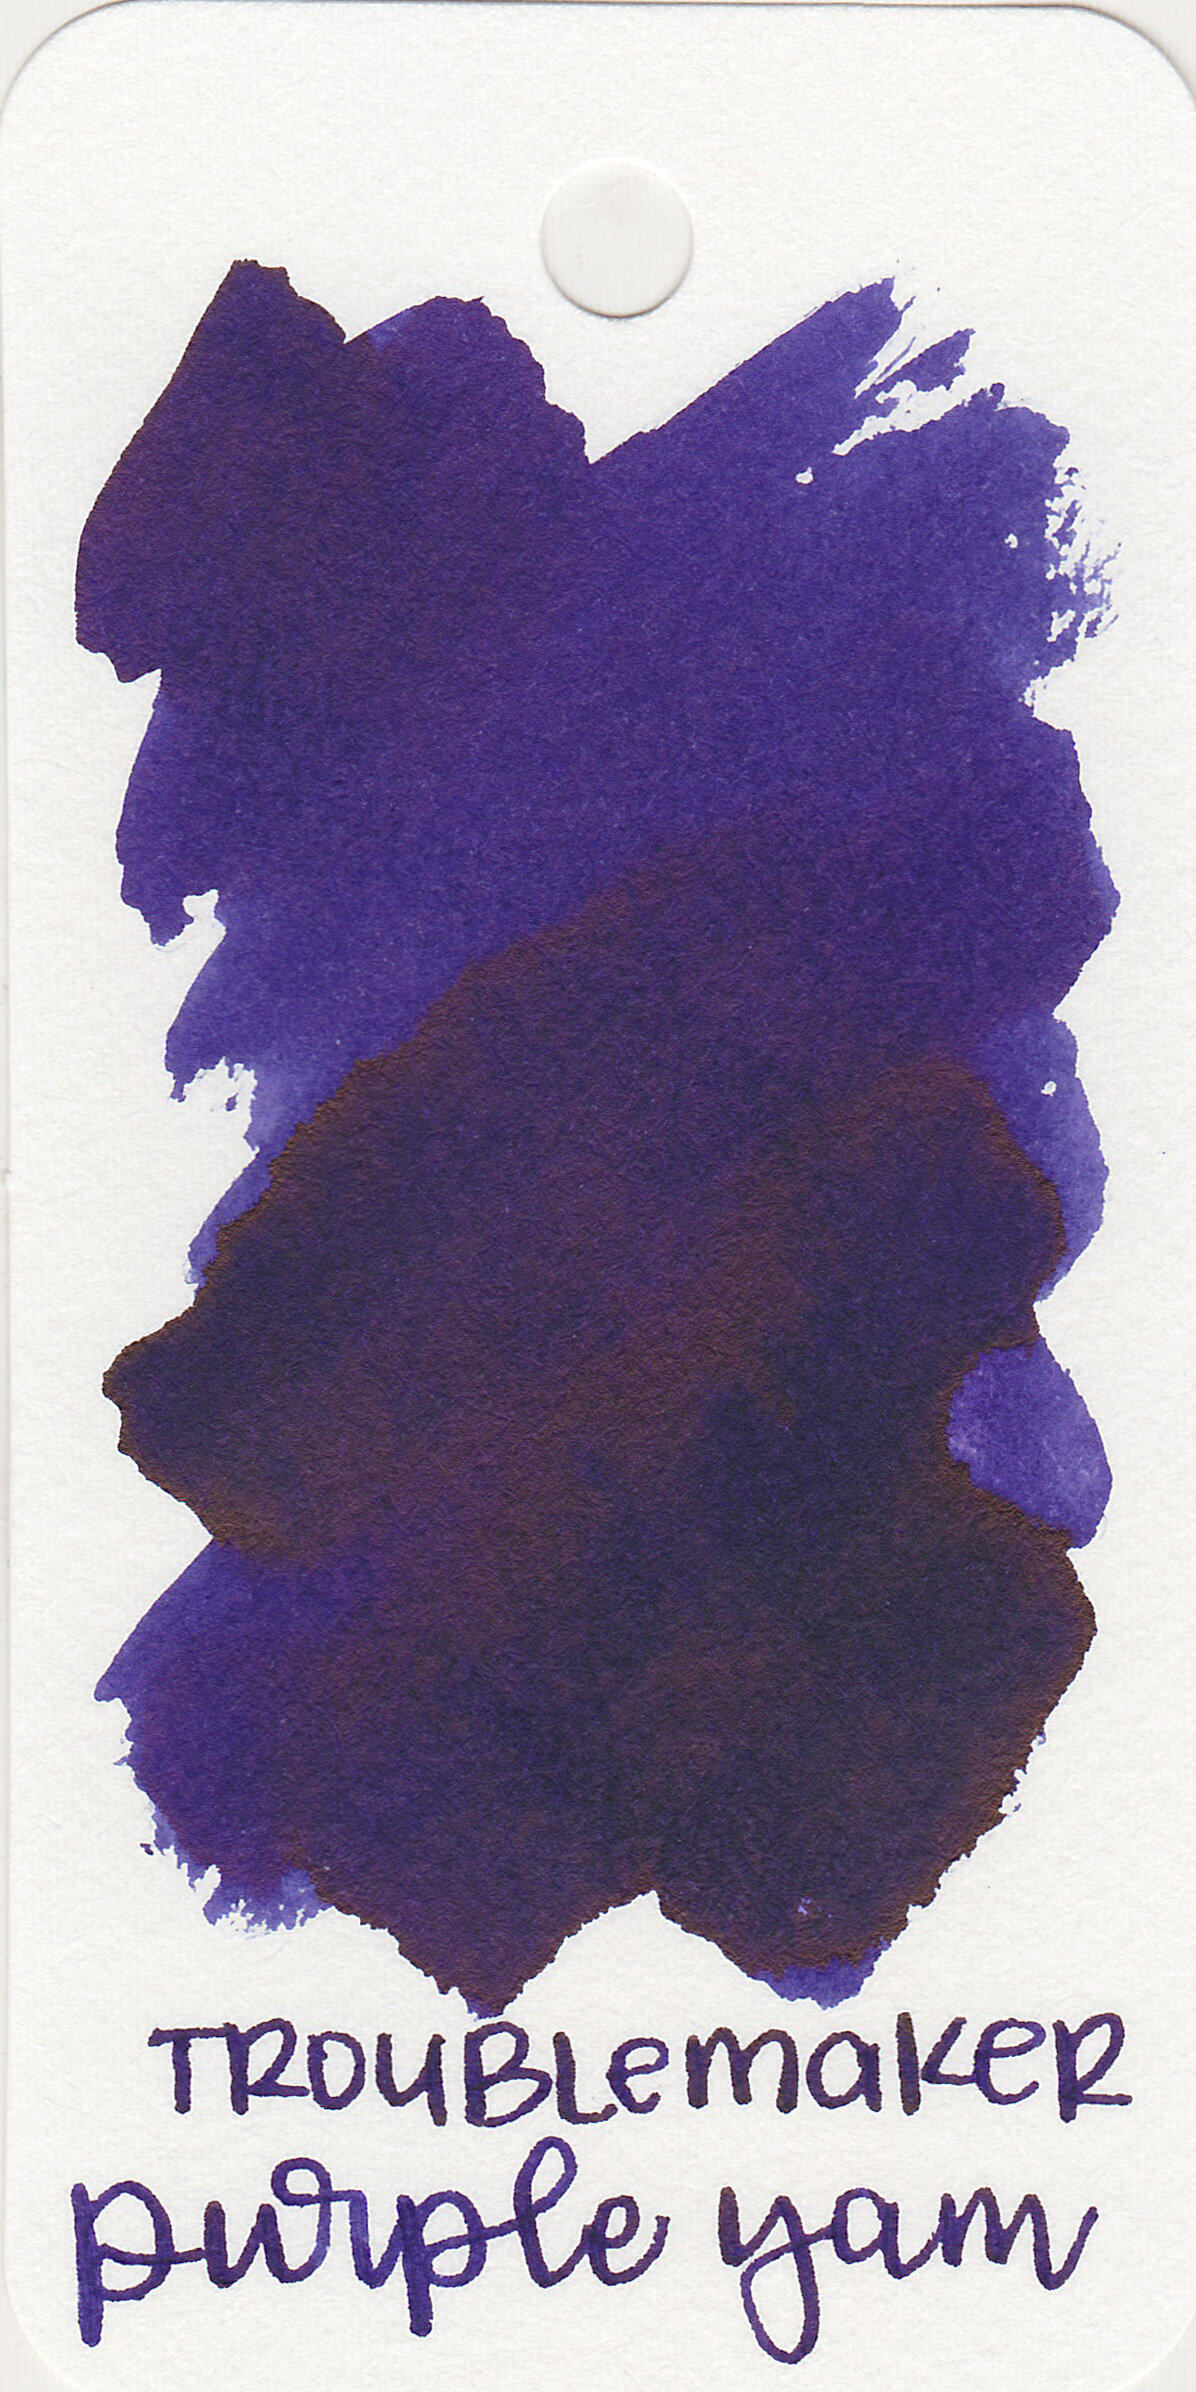 tbm-purple-yam-1.jpg